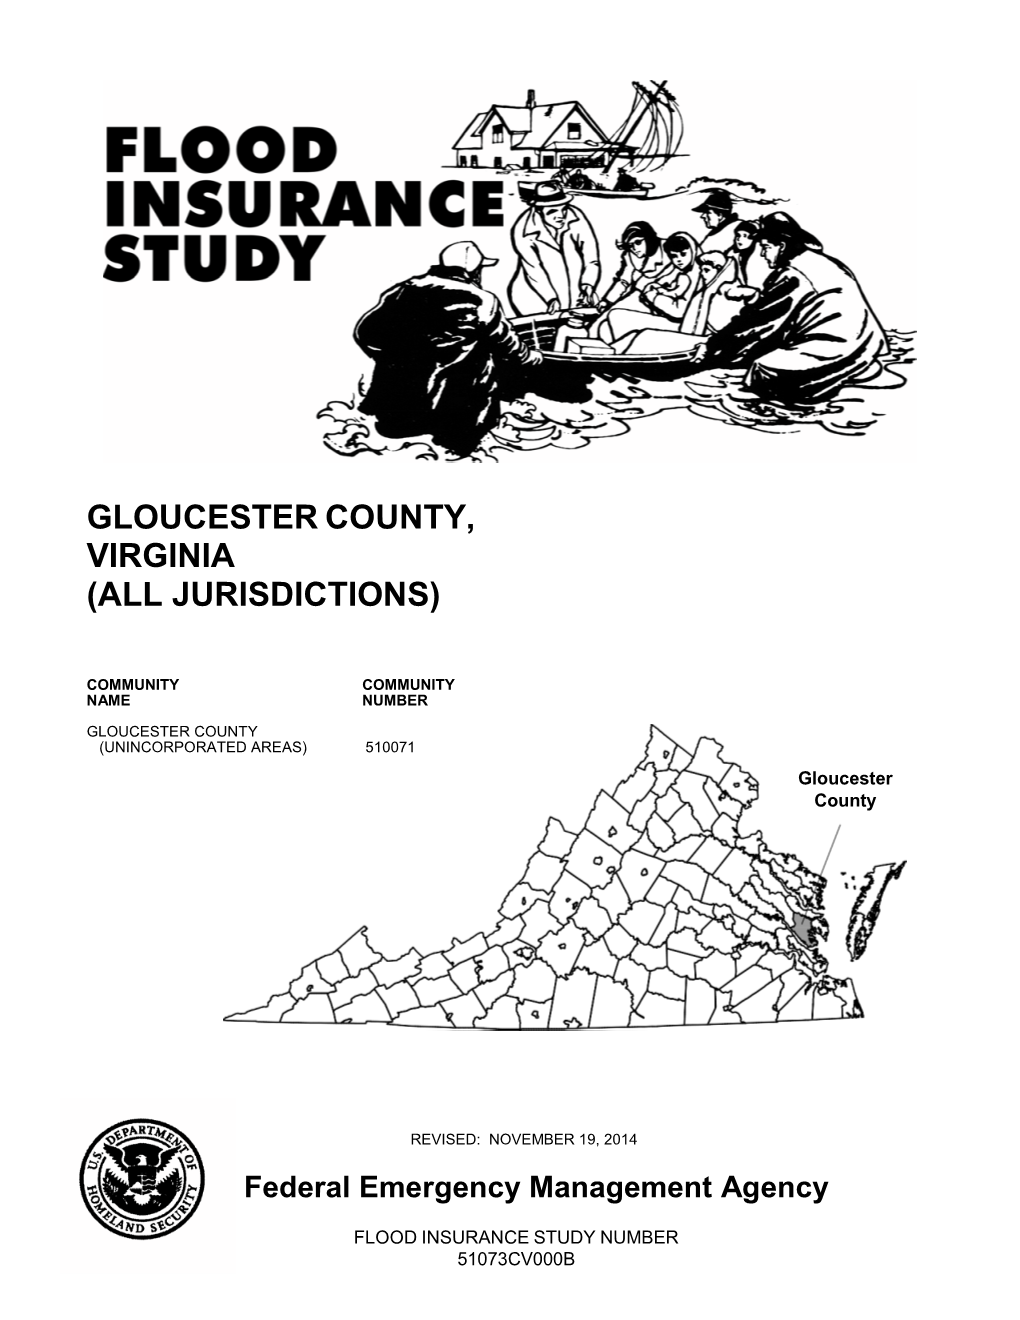 Flood Insurance Study Number 51073Cv000b